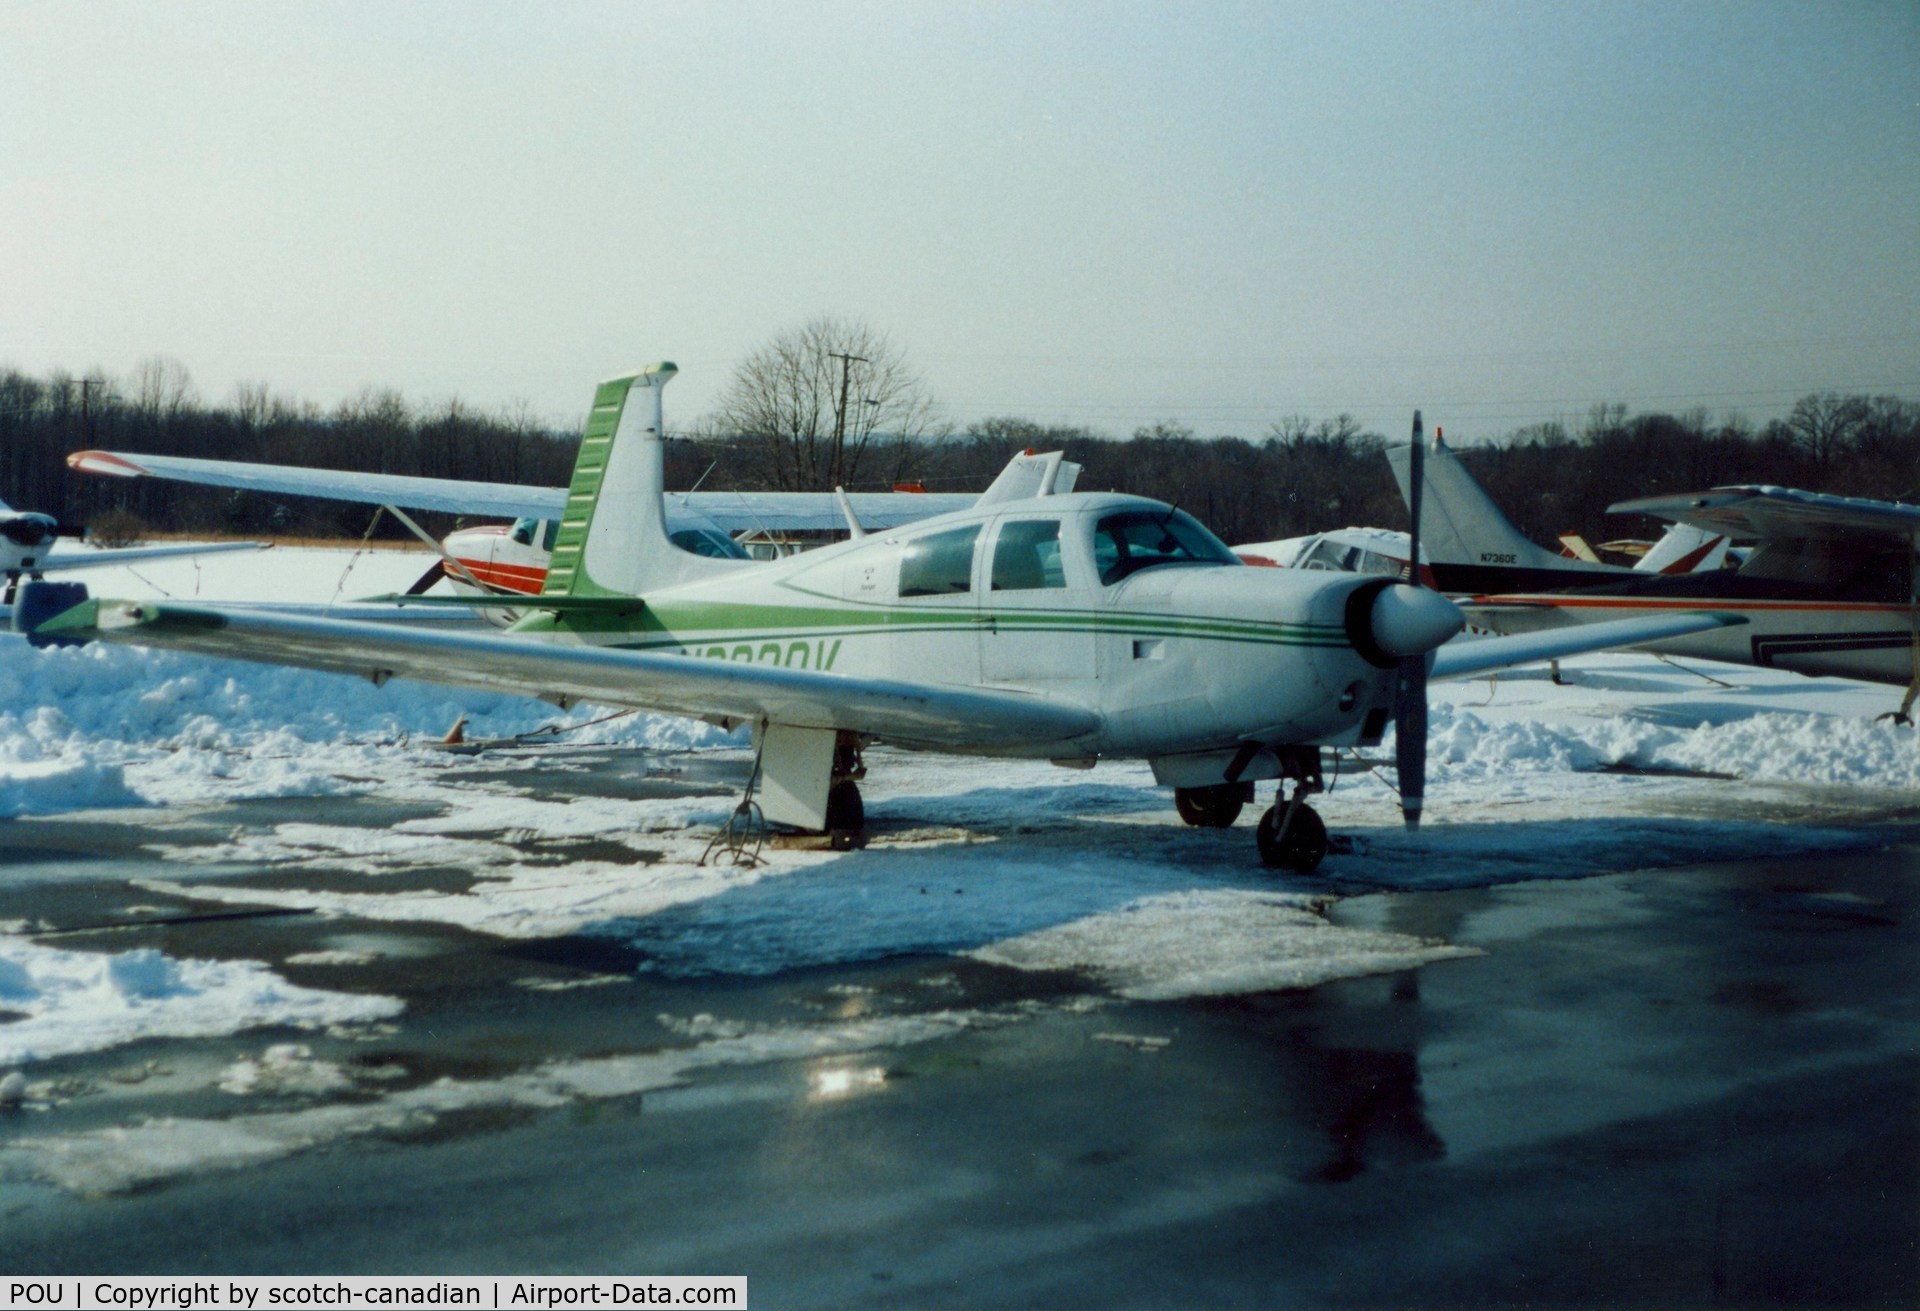 Dutchess County Airport (POU) - Mooney Aircraft parked at Dutchess County Airport, Poughkeepsie, NY - circa 1980's